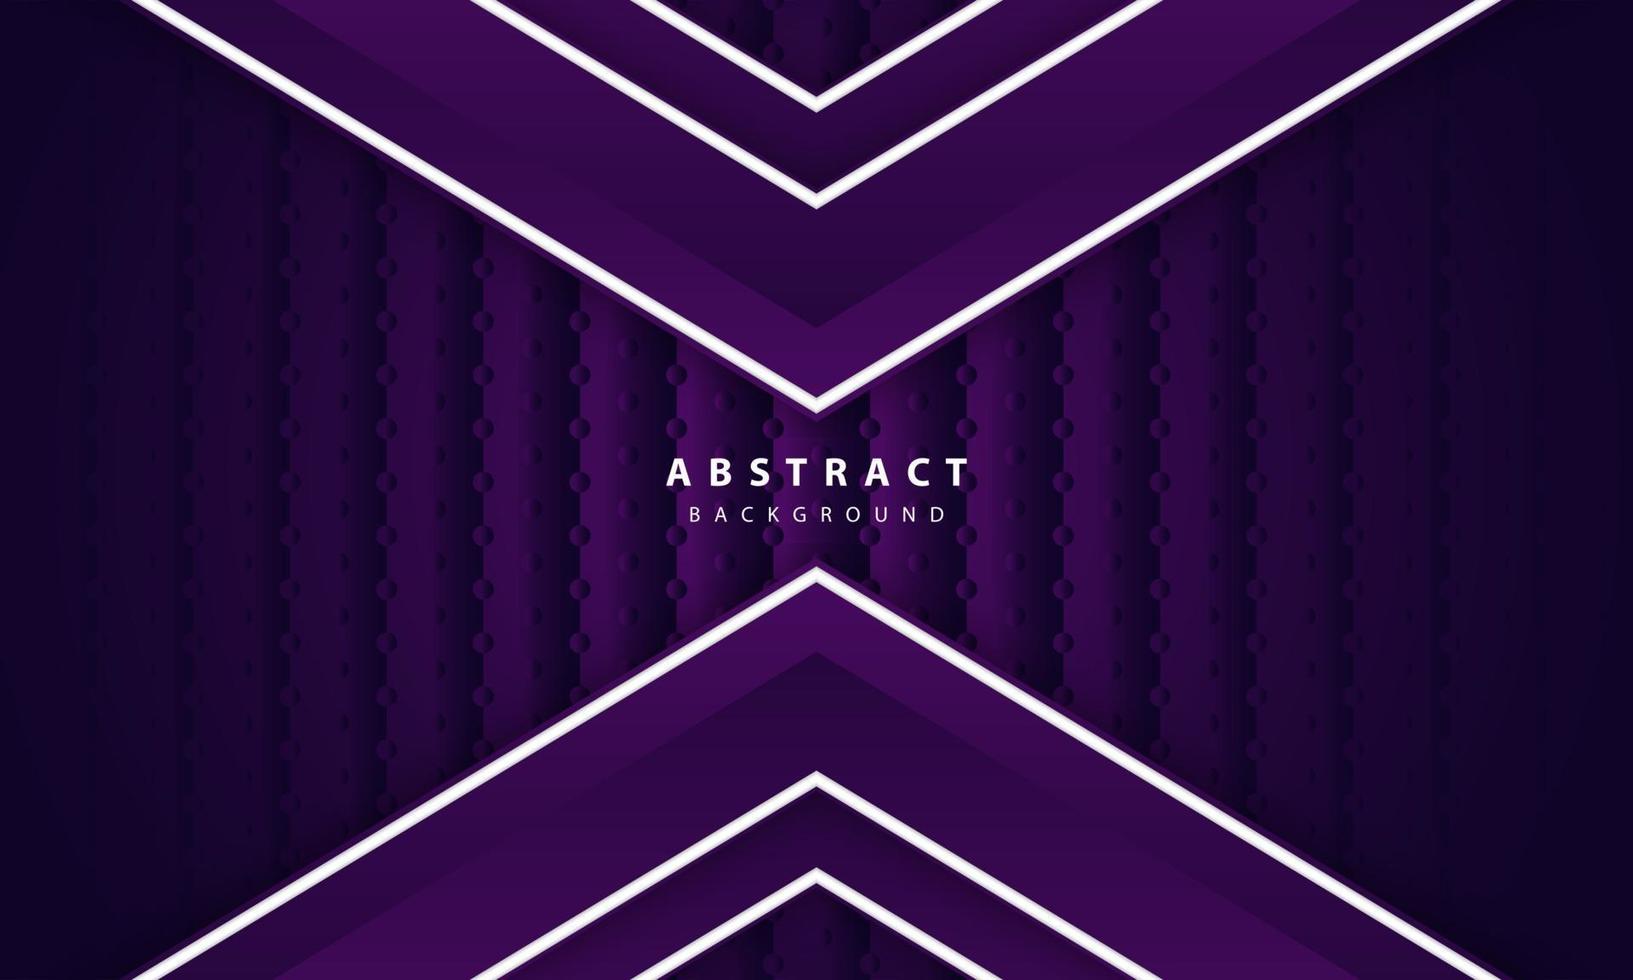 Abstract elegant dark purple on overlap layer background vector